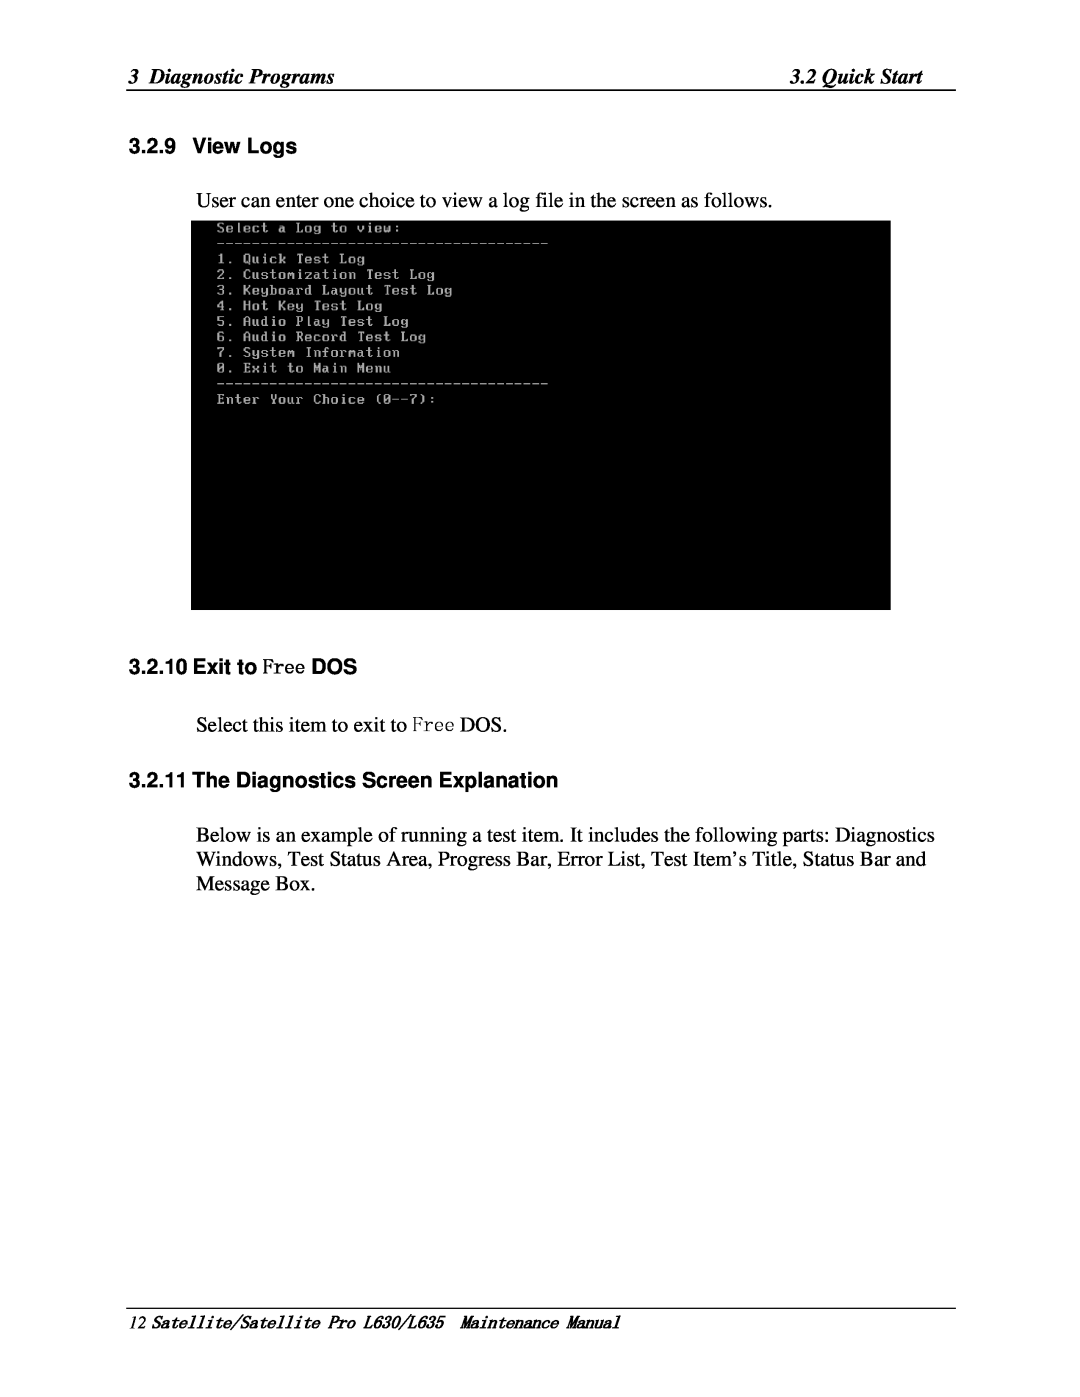 Toshiba L635, L630 manual View Logs, Exit to Free DOS, The Diagnostics Screen Explanation 